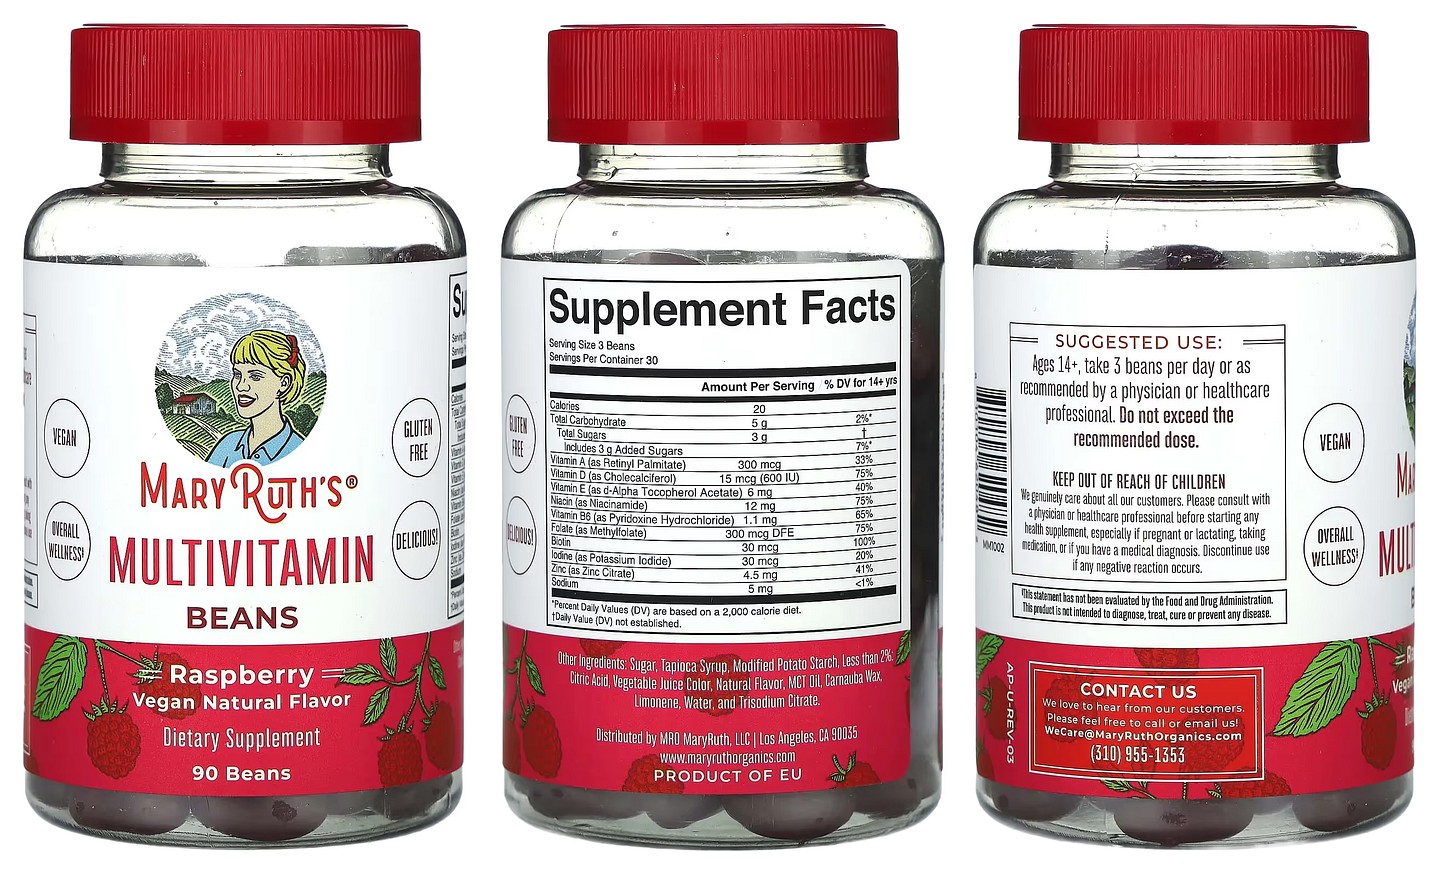 MaryRuth's, Multivitamin Beans, Raspberry packaging